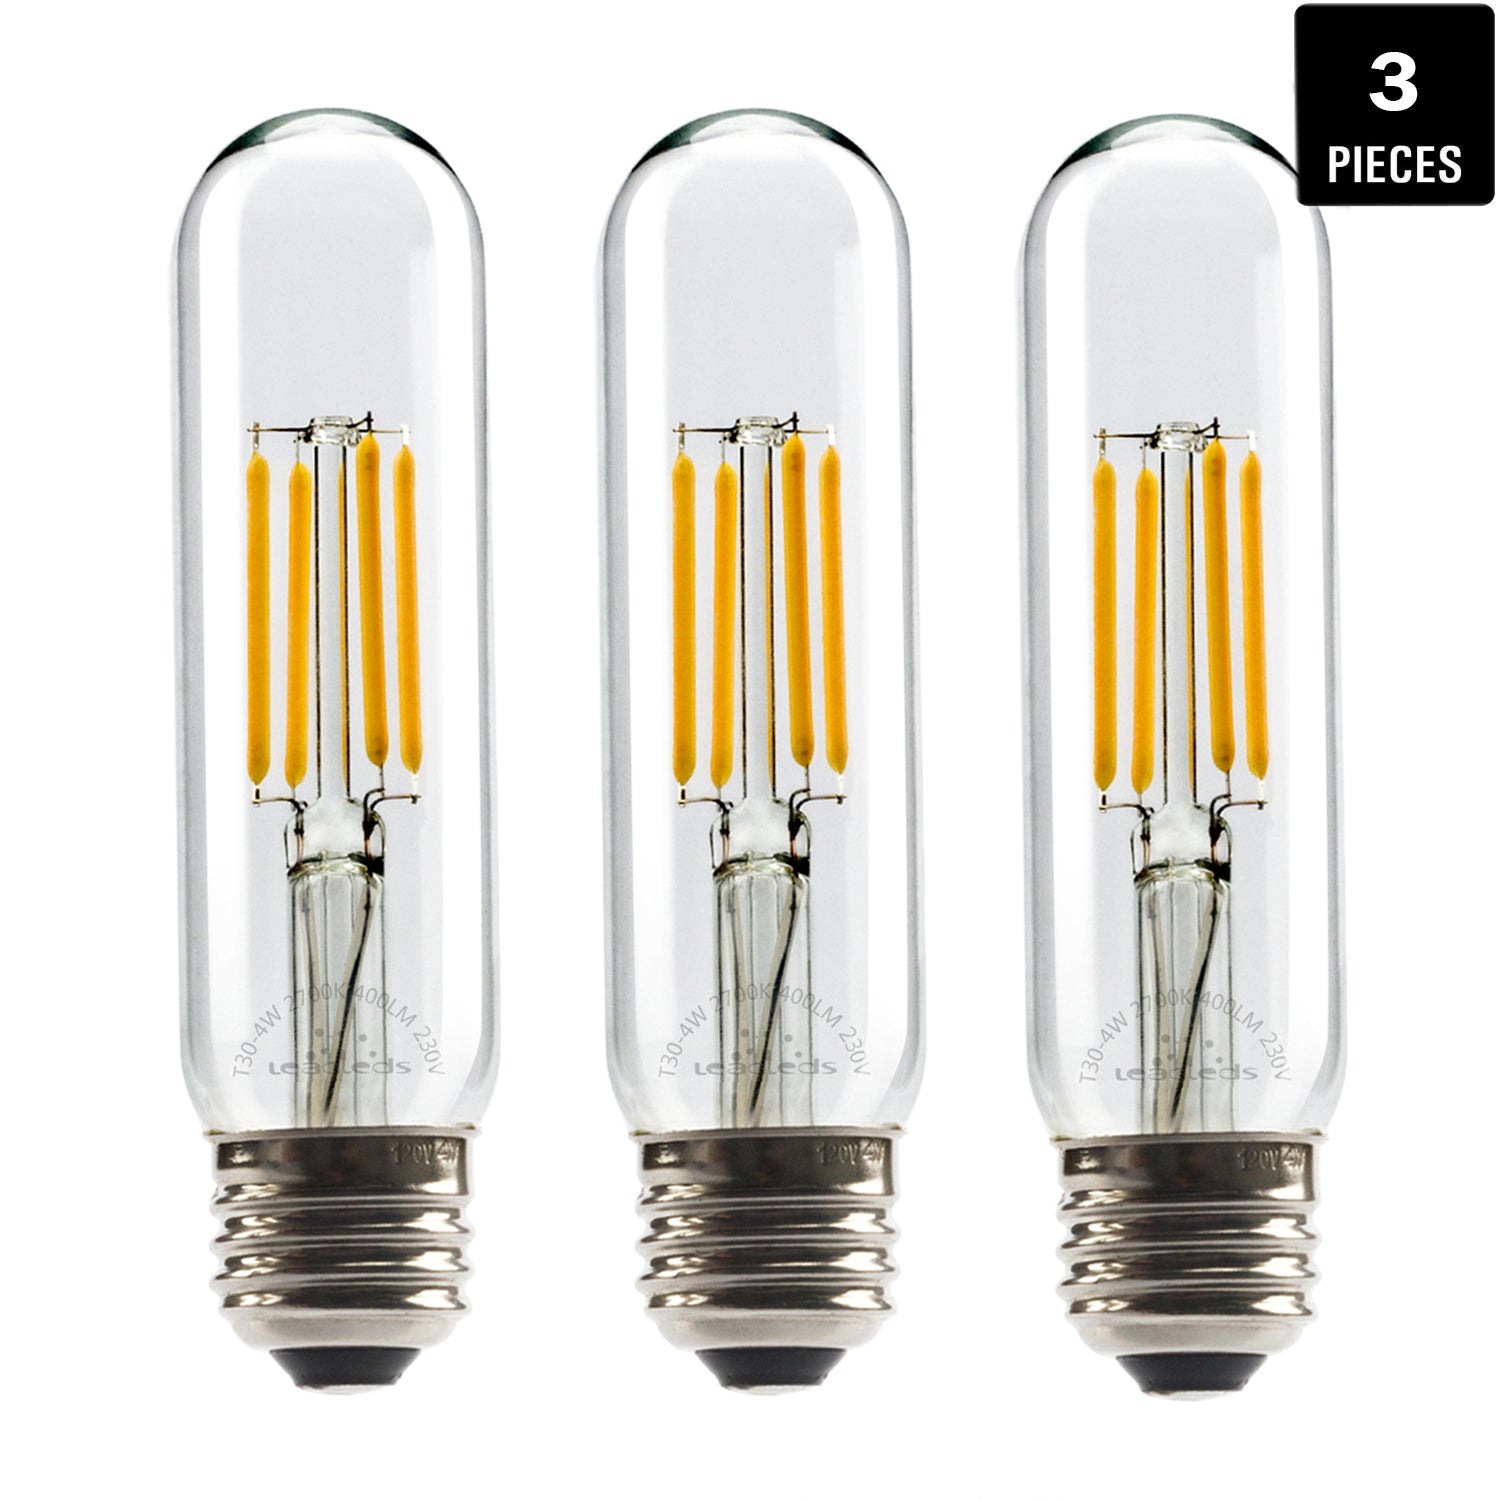 Bombilla LED T10, bombillas tubulares LED regulables de 8 W, equivalente a  bombilla incandescente de 75 a 100 W, blanco suave de 3000 K, vidrio